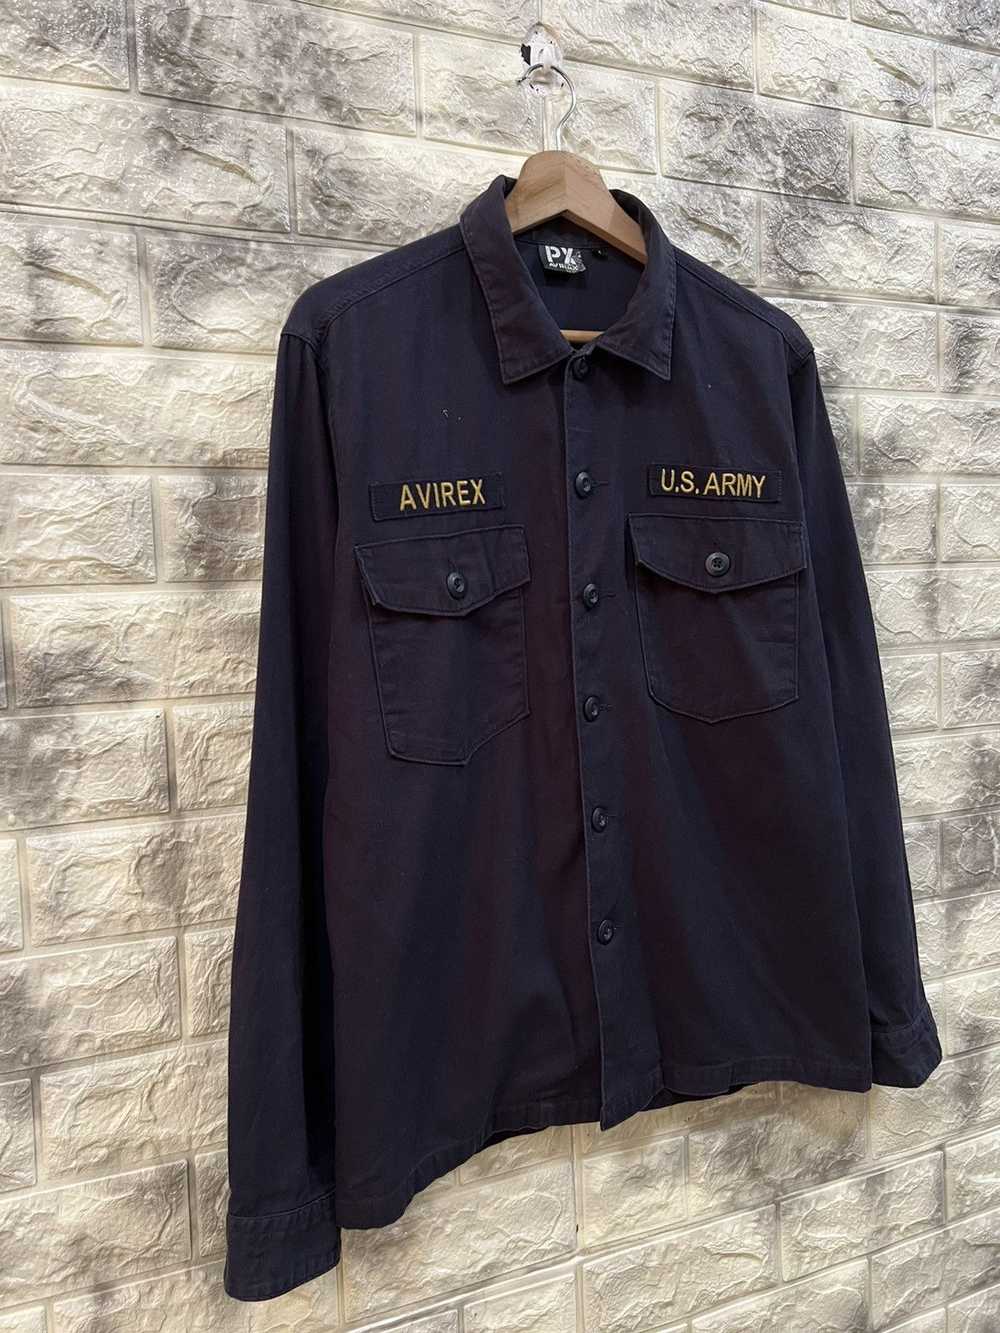 Avirex Avirex US Army Shirt - image 4